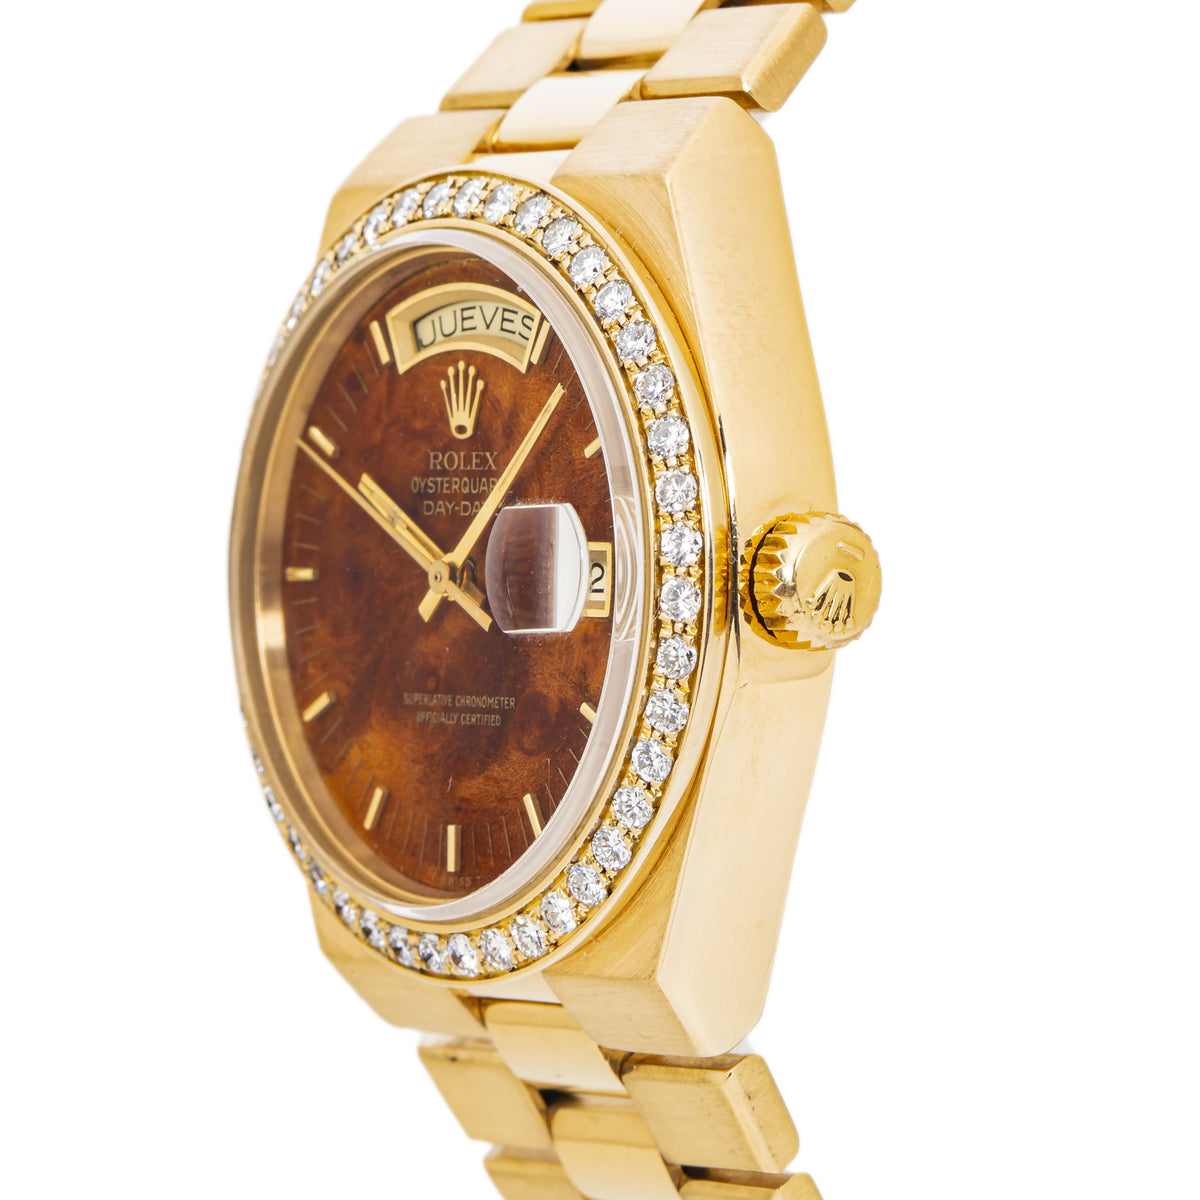 Rolex Oysterquar Day Date 19018 Rare Wood Dial 18K Gold Diamond Bezel Watch 36mm